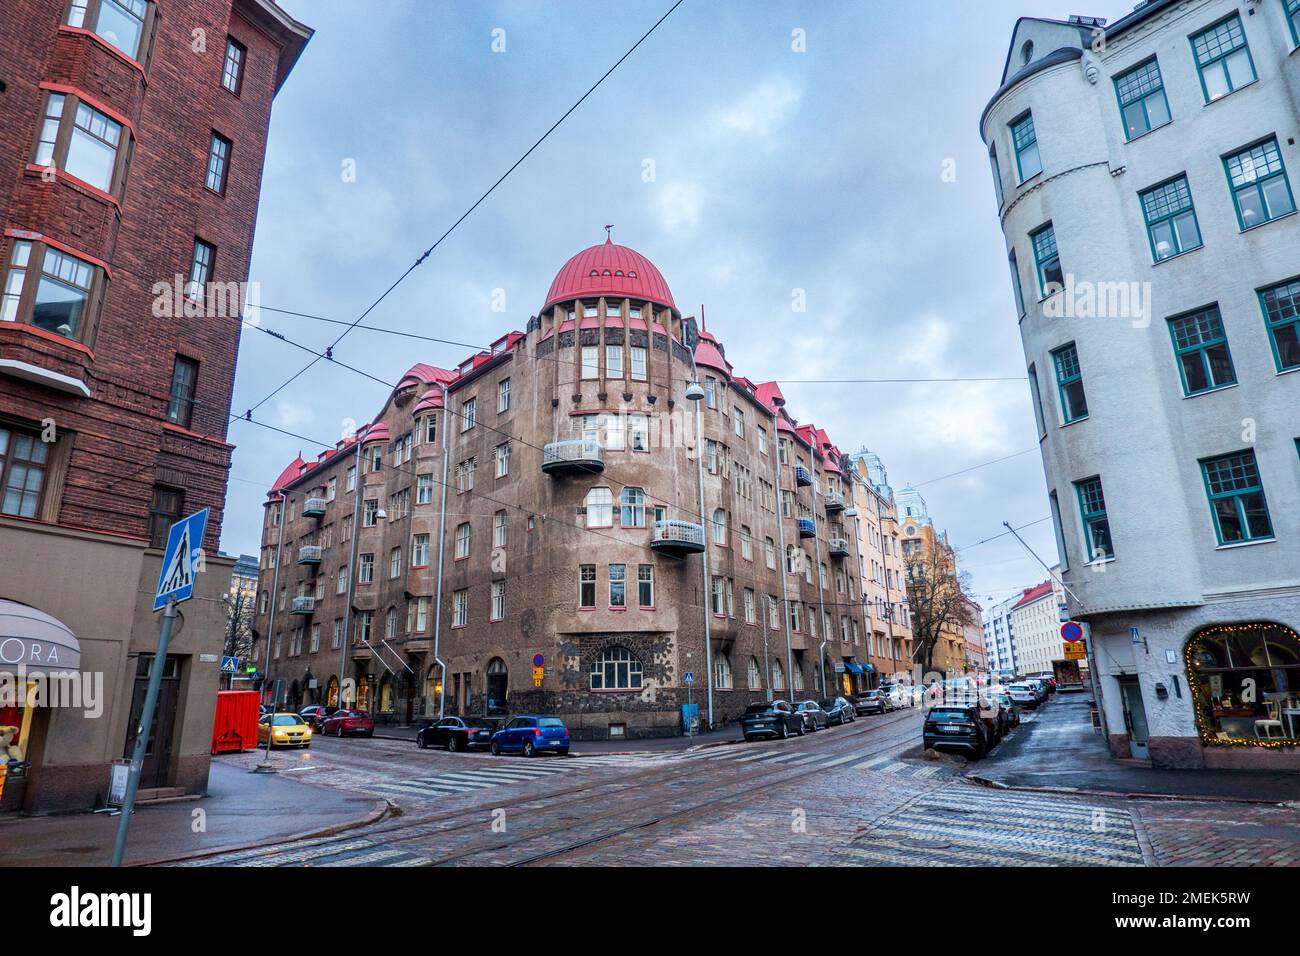 Street Helsinki Snow Stock Photo